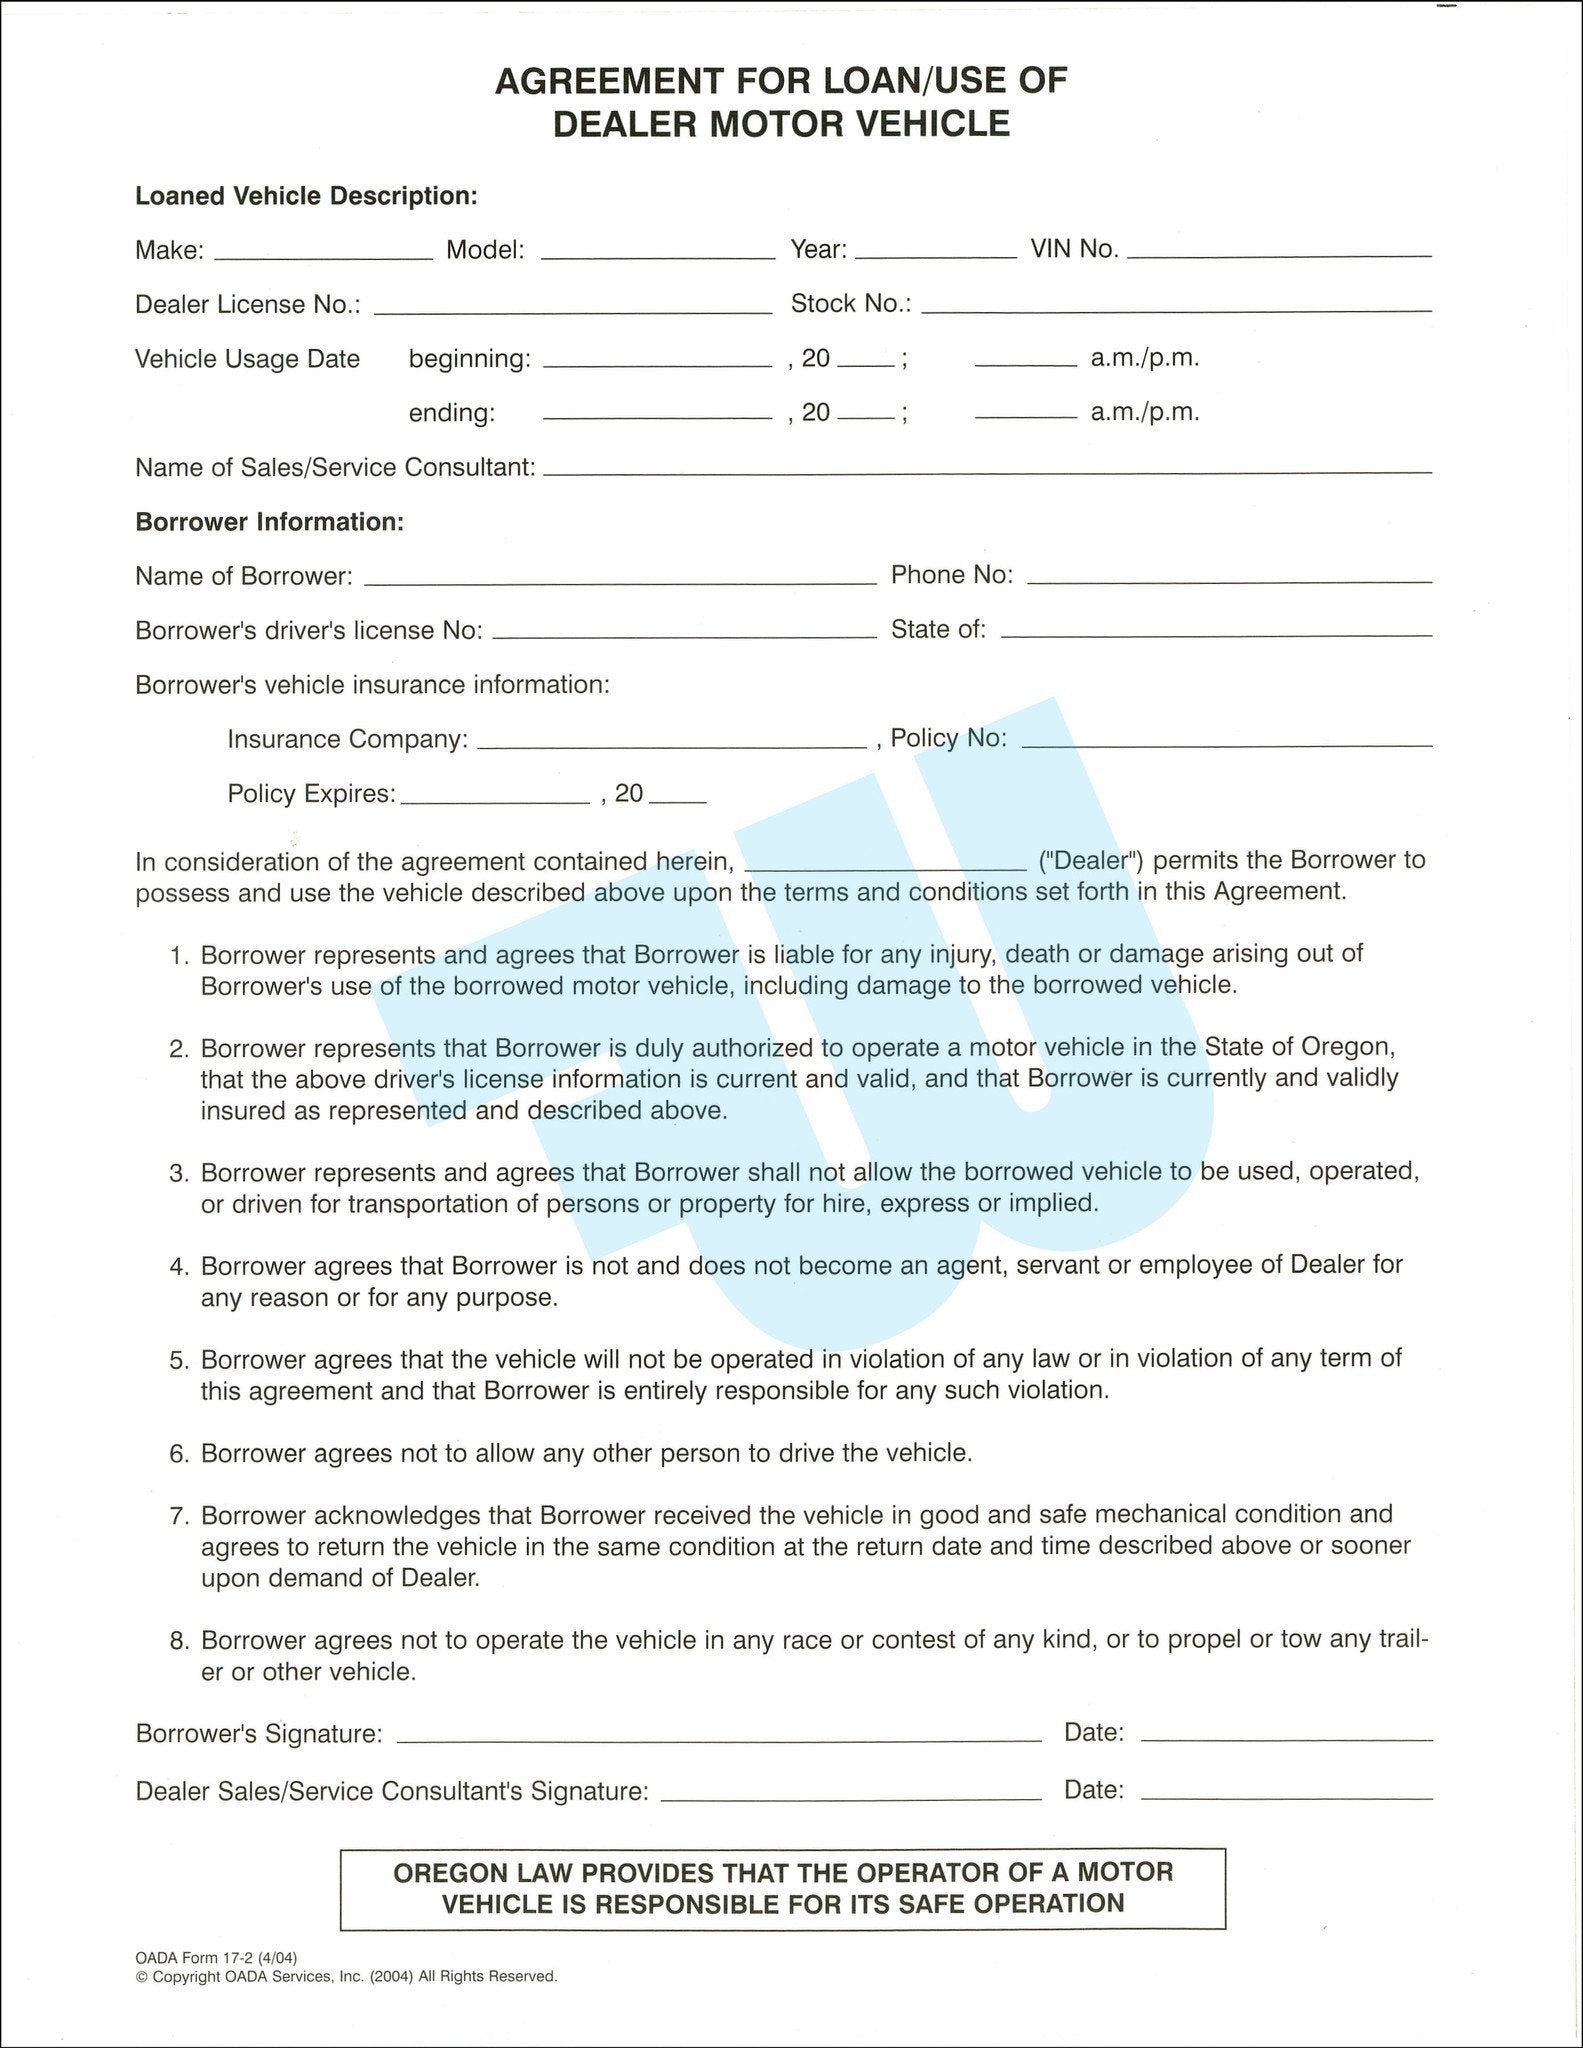 Agreement for Loan/Use of Dealer Motor Vehicle (Temporary Loan Agreement) - flywheelnw.com